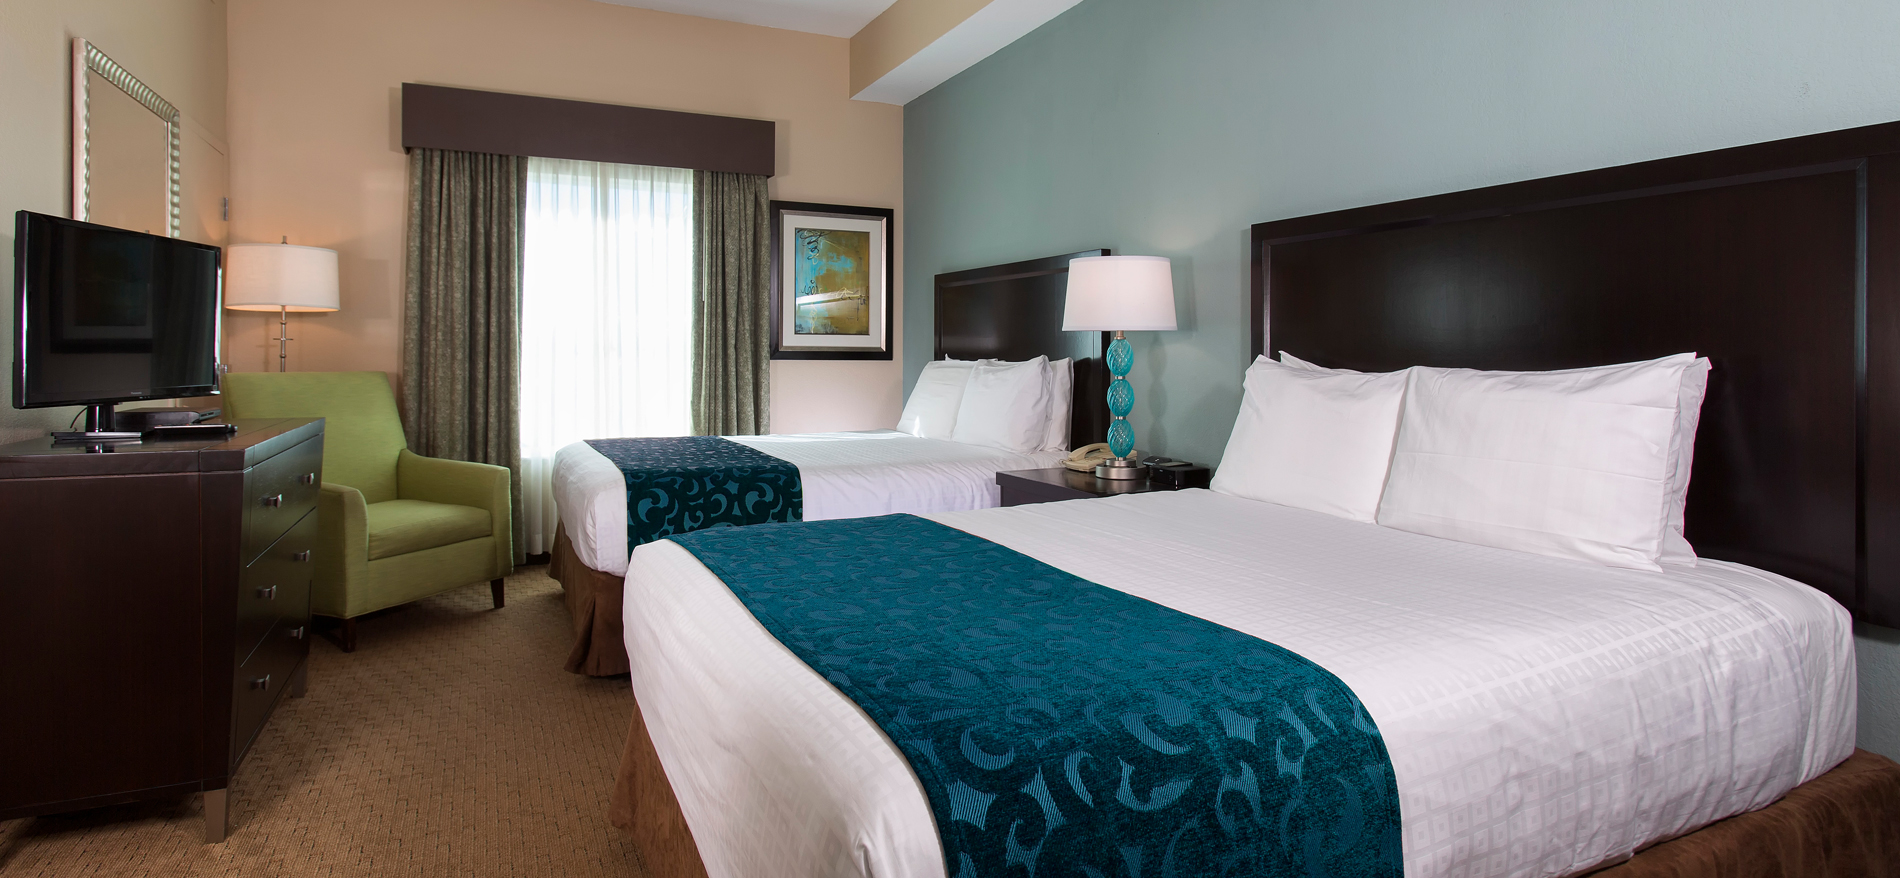 Hawthorn Suites Lake Buena Vista - Bed Room